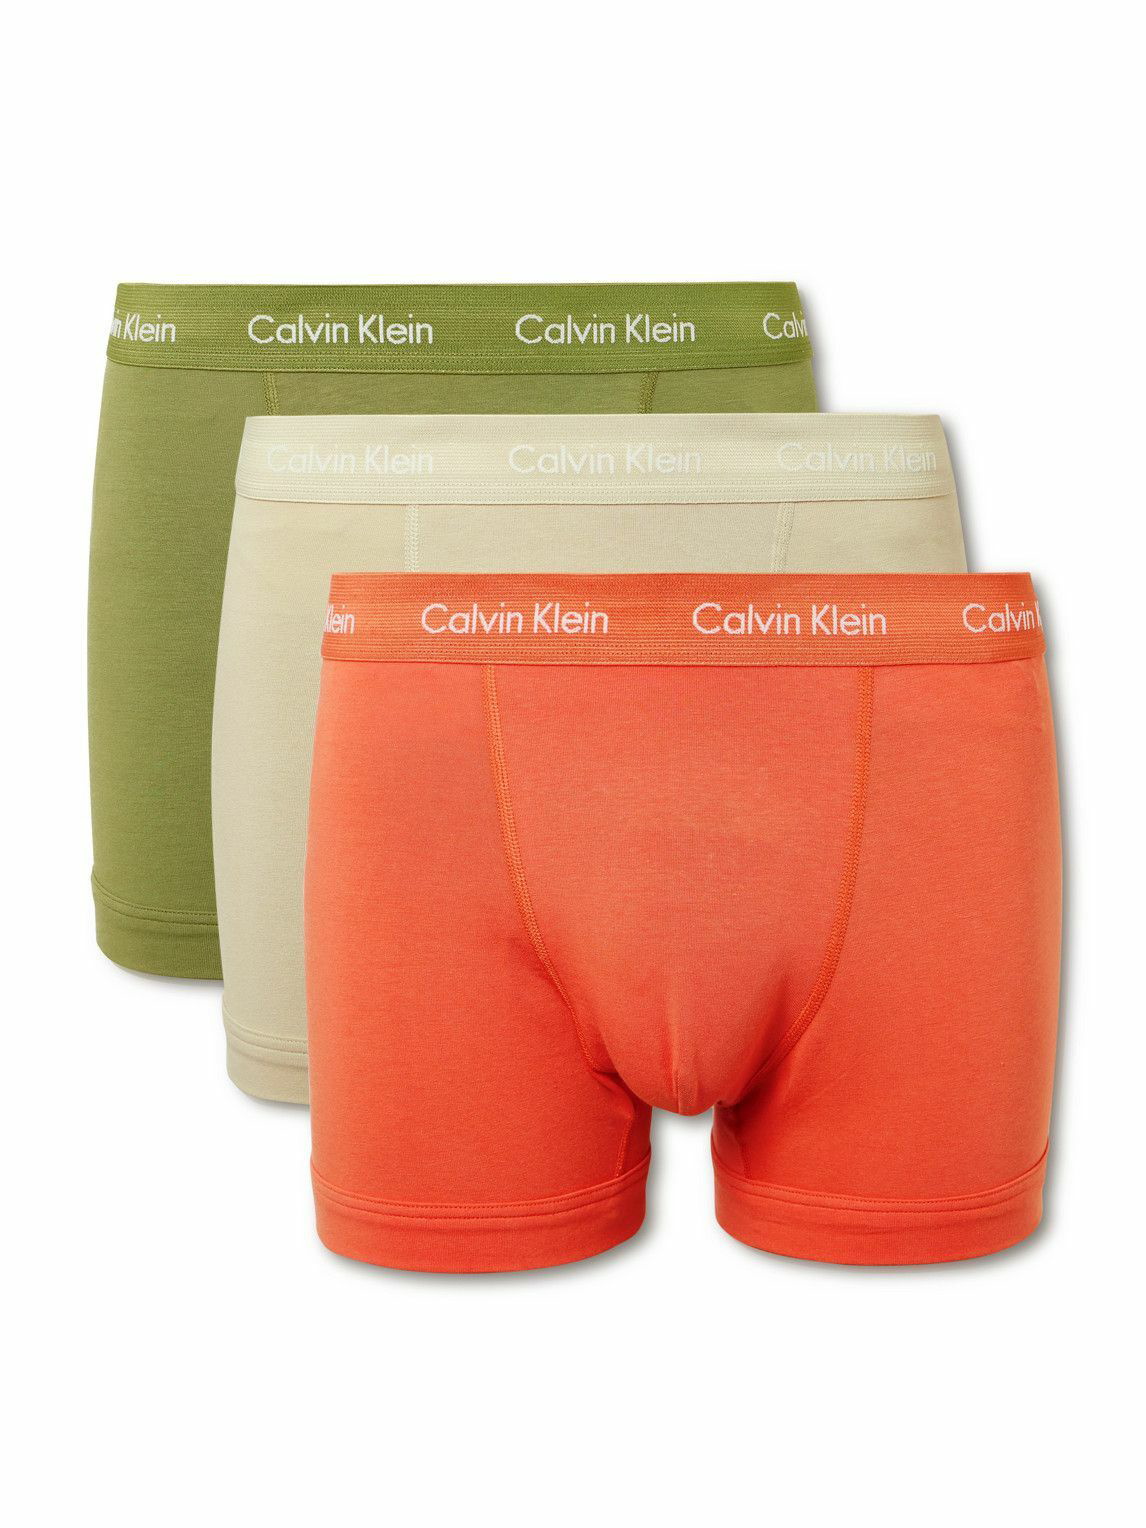 Calvin Klein Modern Cotton 3-pack stretch trunks in multi